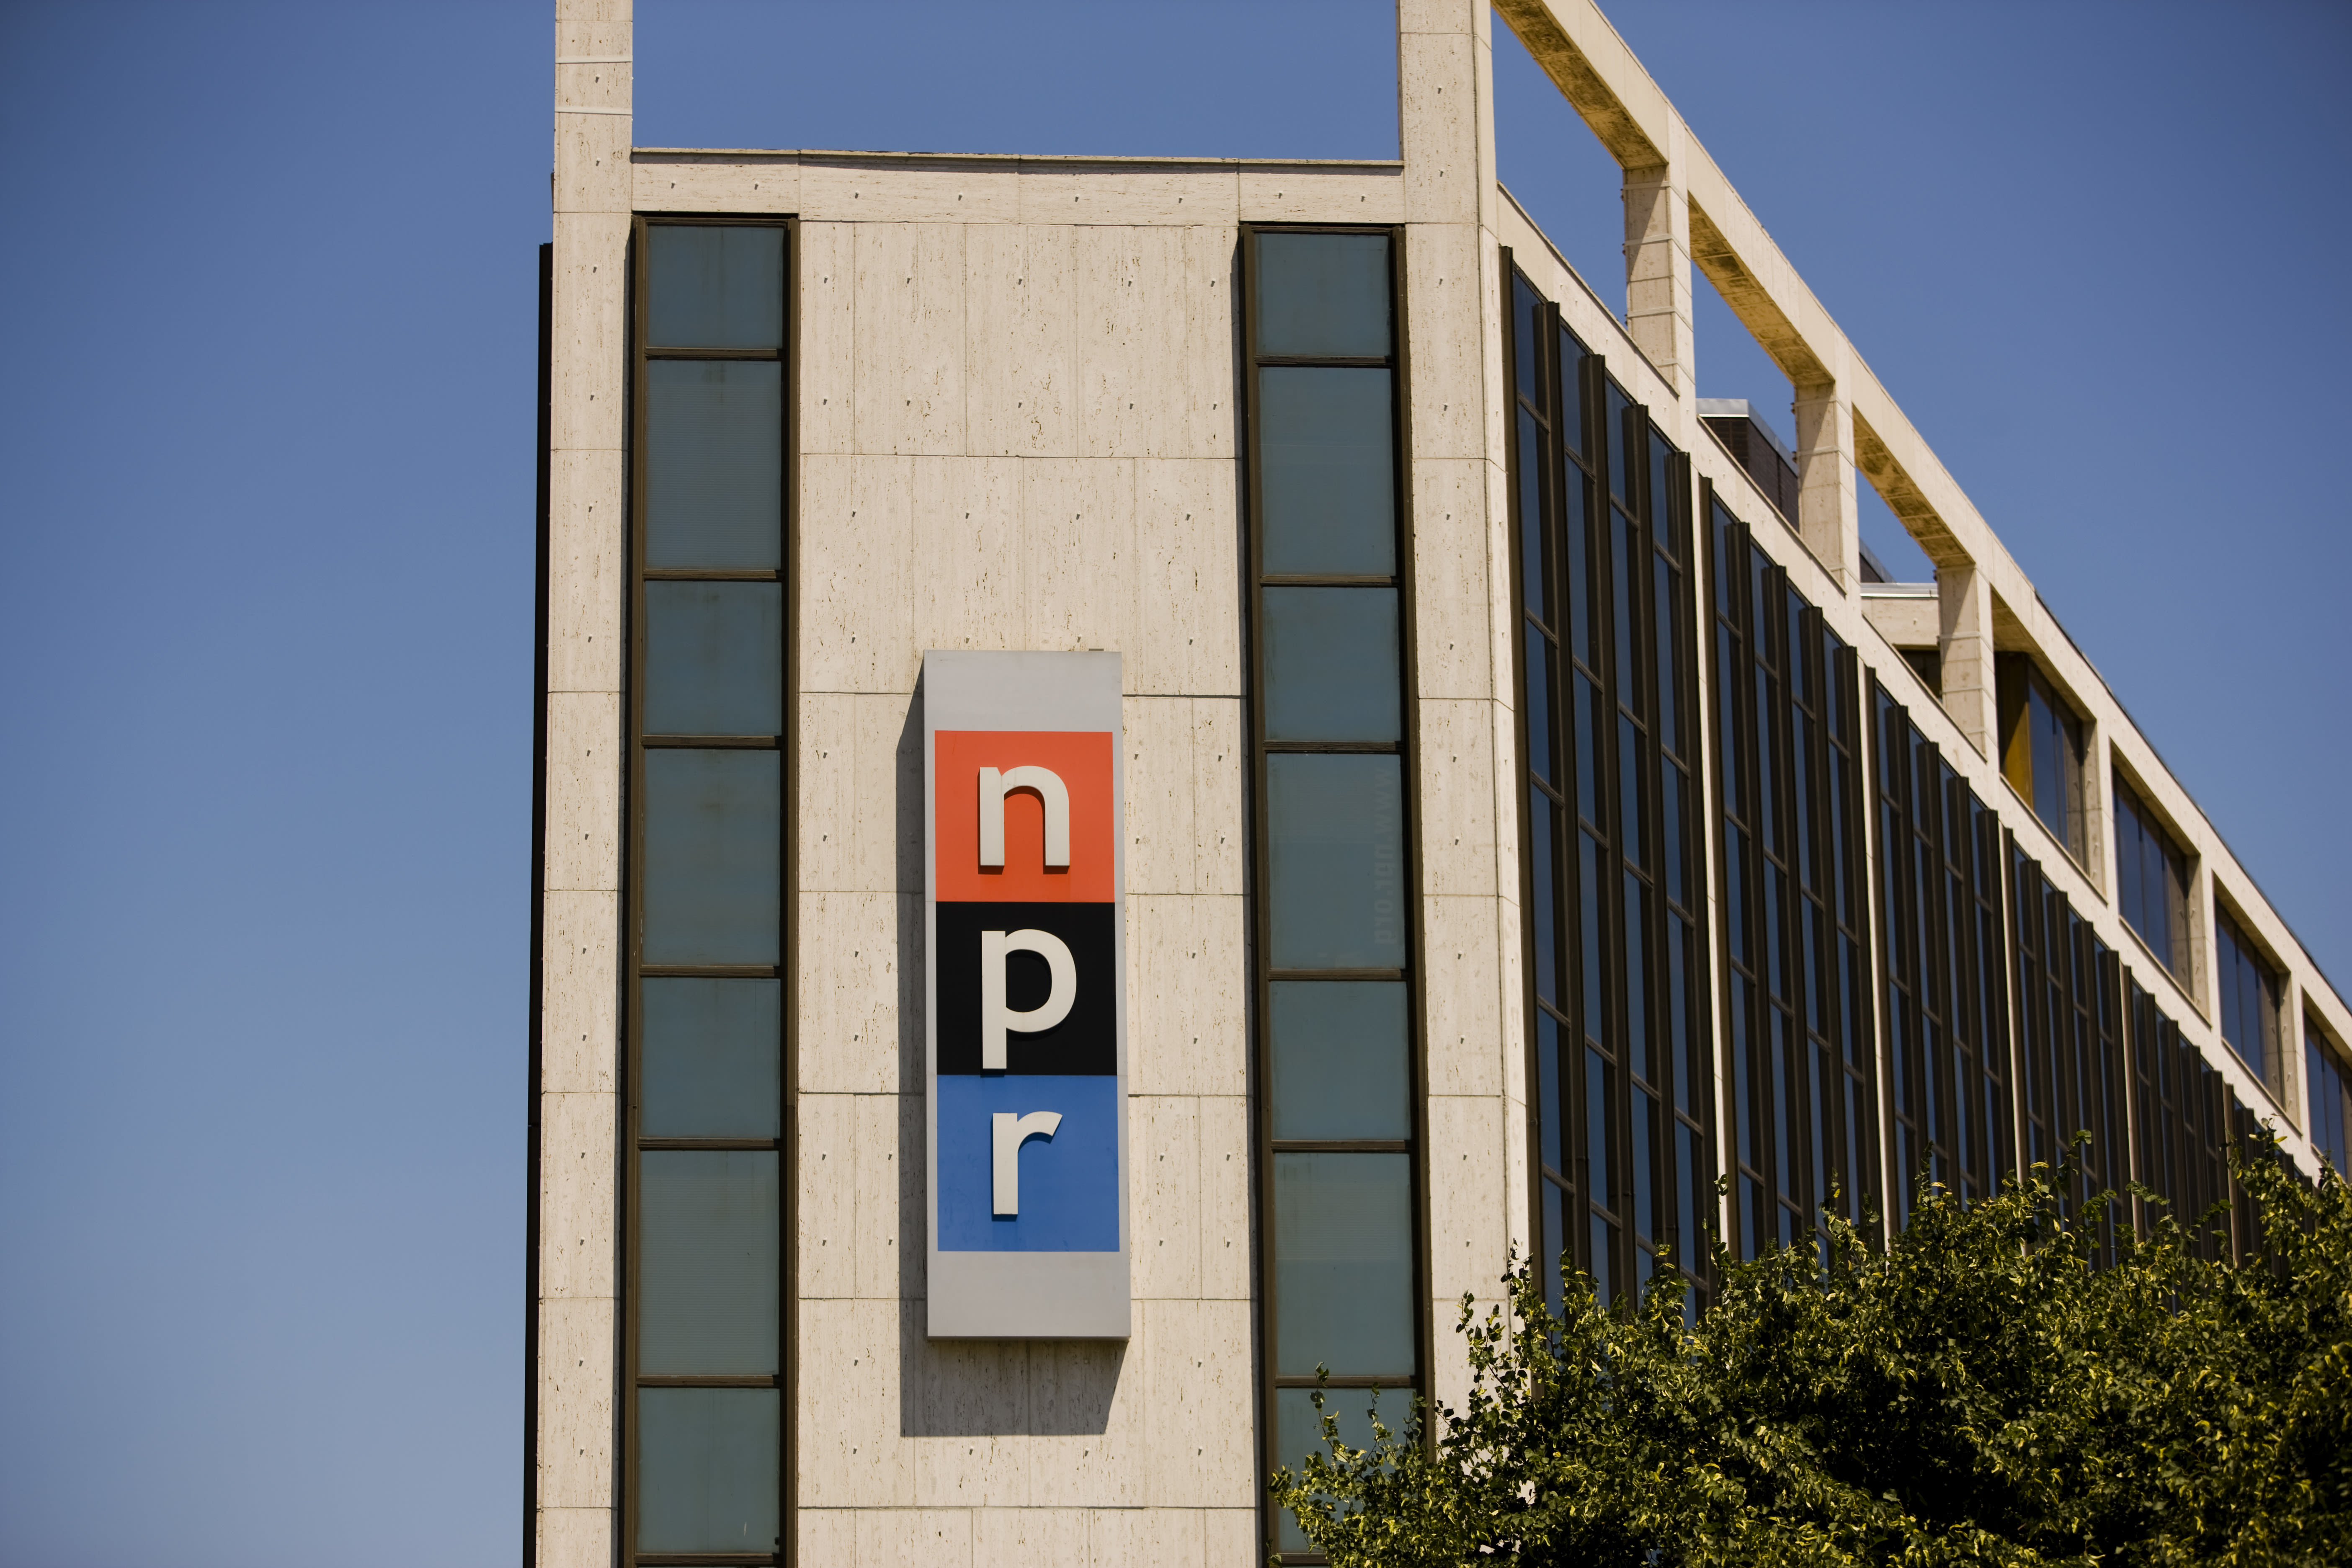 NPR building in Washington, DC